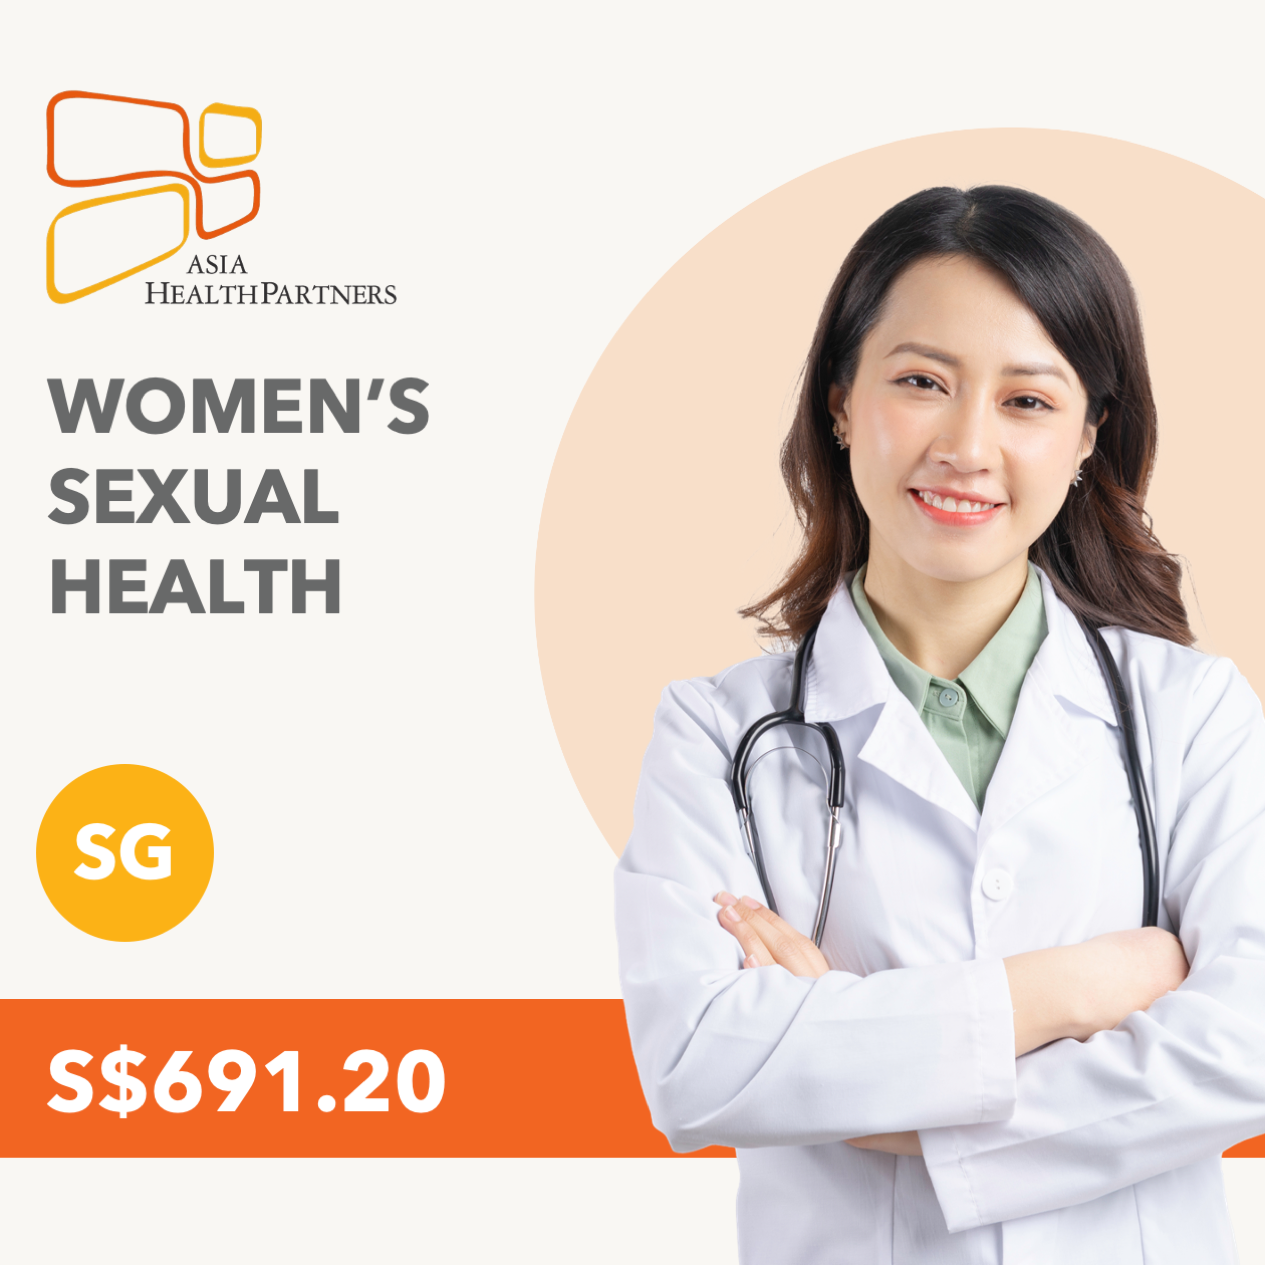 Asia HealthPartners (SG) Women’s Sexual Health Screening